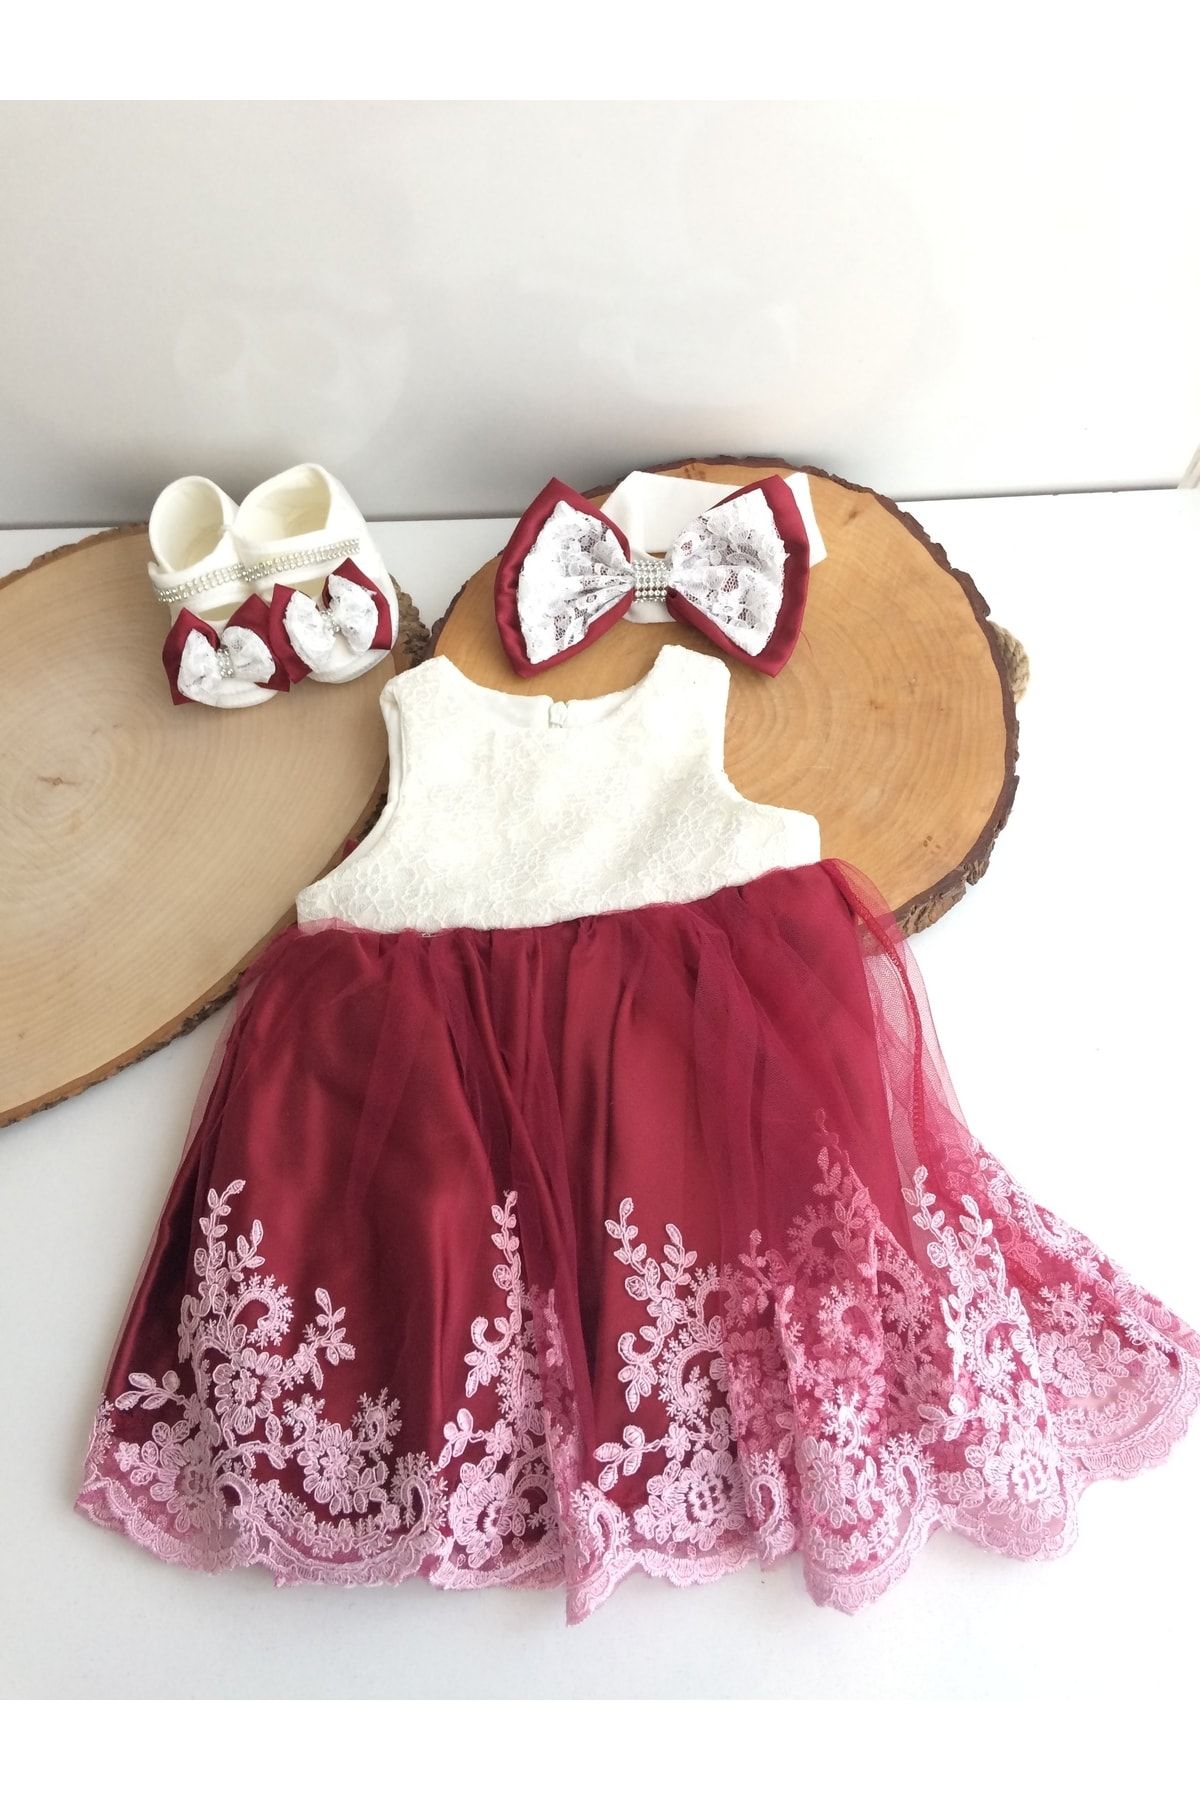 babylia Kız Bebek Mevlid Elbisesi, Bebek Mevlüt Elbisesi, Kız Bebek Mevlüt Takımı, Kız Bebek Mevlüt Elbisesi